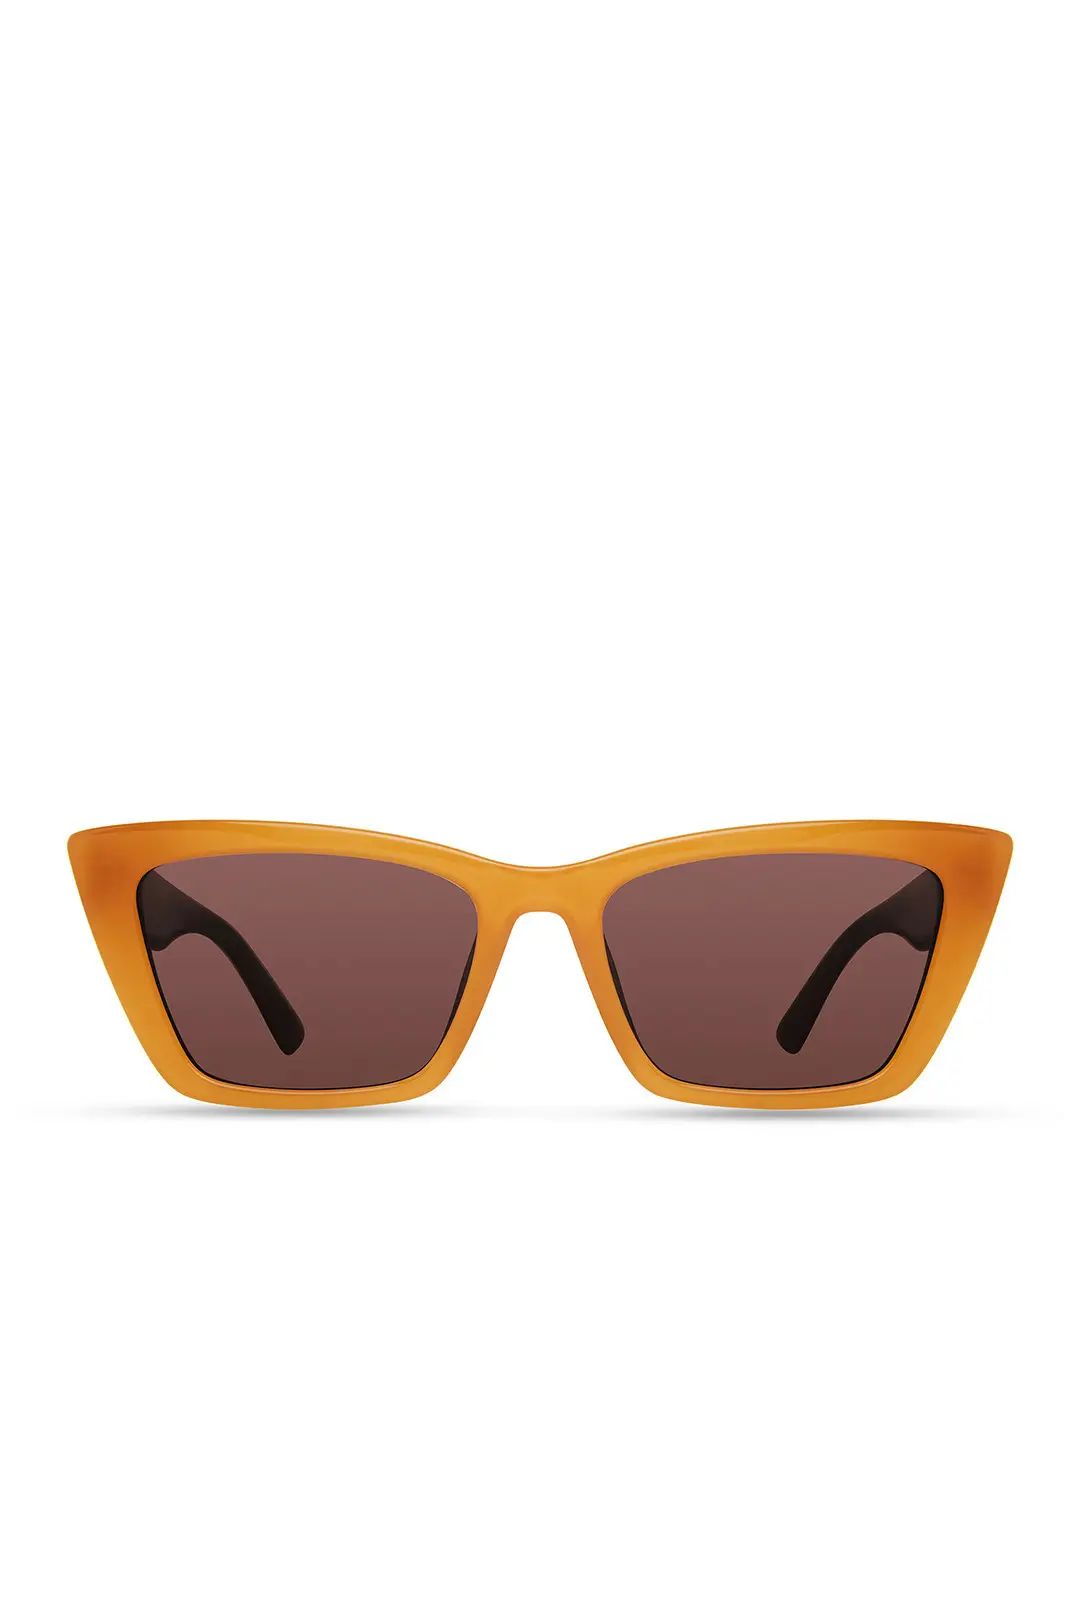 Shay Sunglasses | Rent the Runway